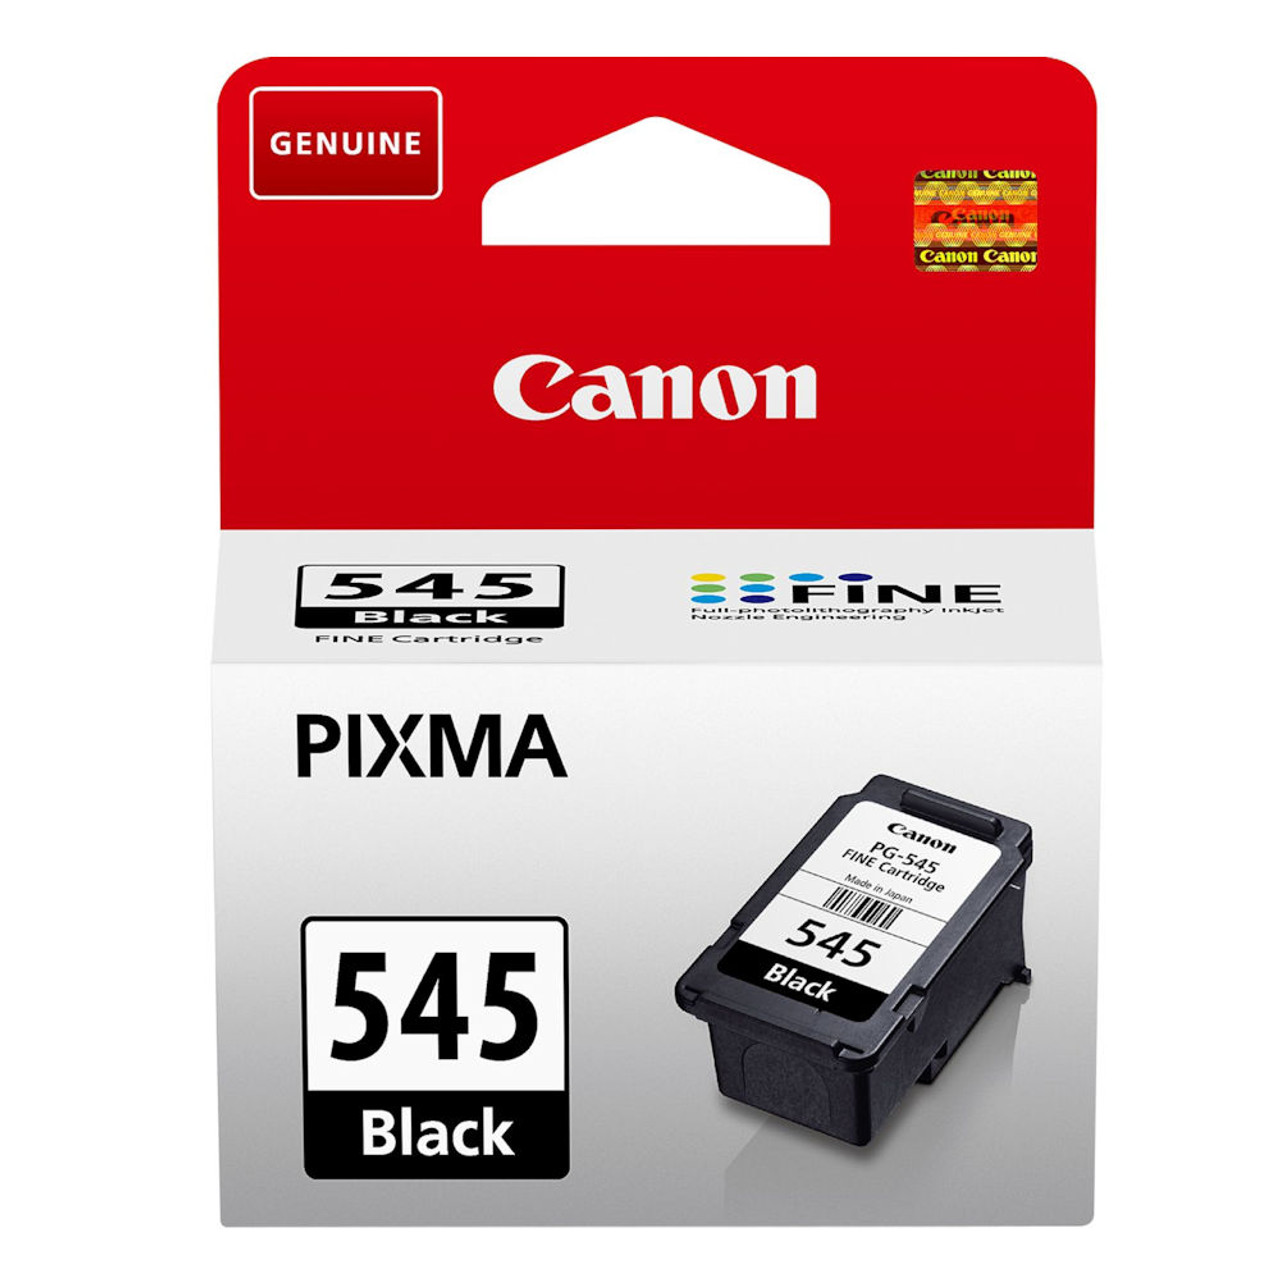 CANON PG 545 ORIGINAL BLACK CARTRIDGE BLACK PRINTER PG-545 CHEAP